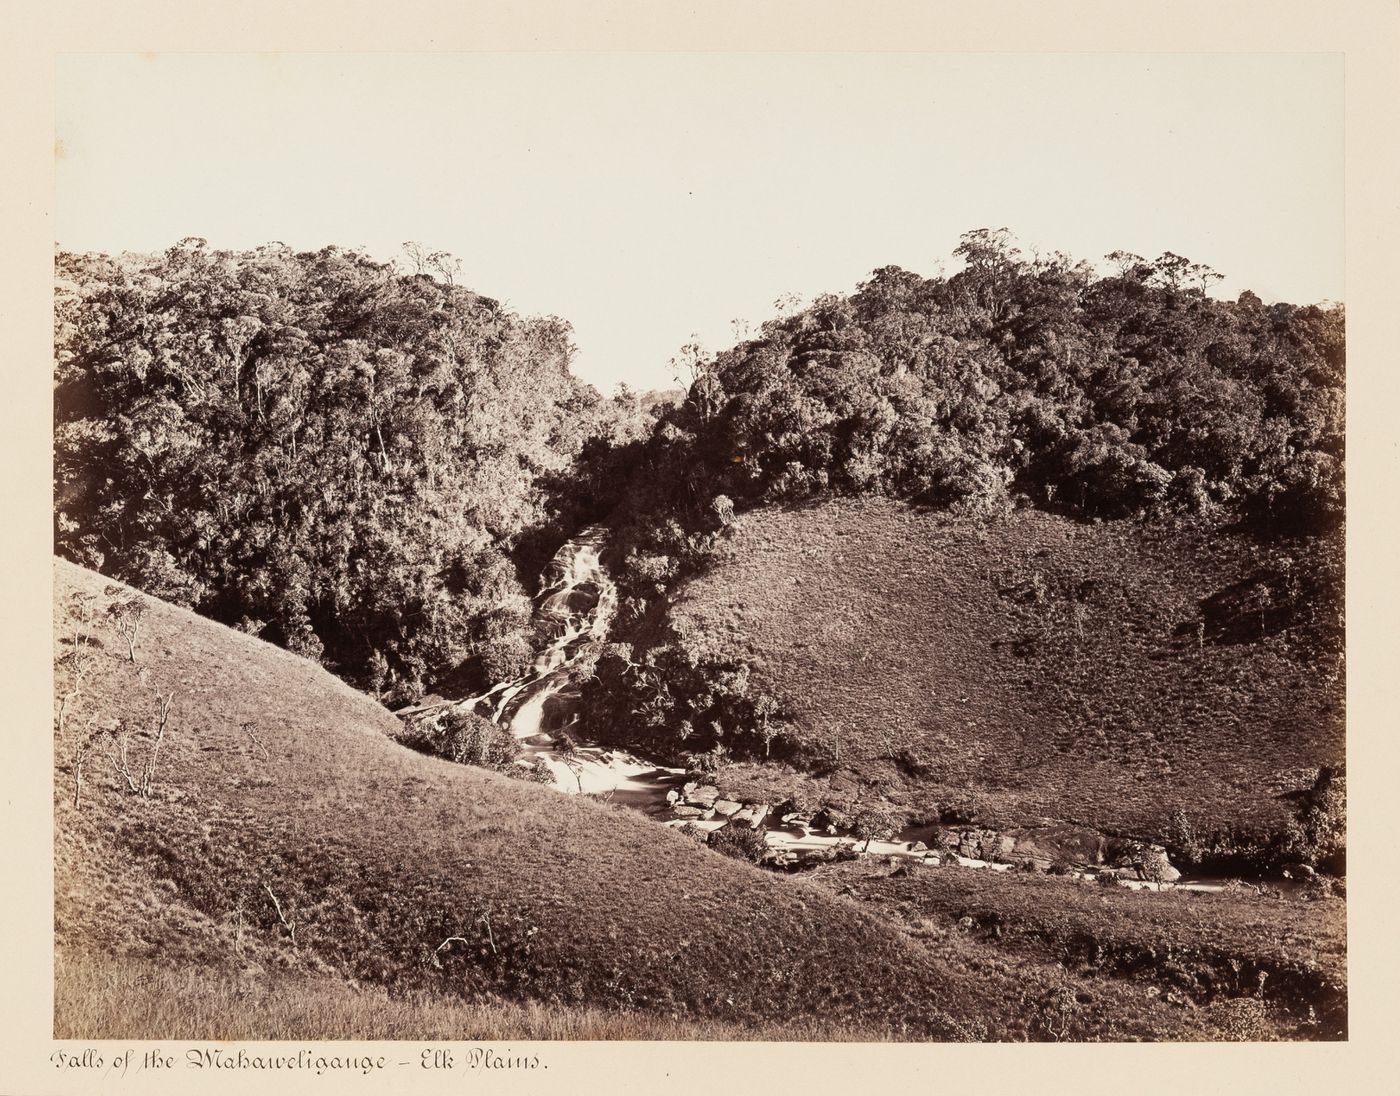 View of the Falls of the Mahaweli Ganga, Elk Plains, Ceylon (now Sri Lanka)